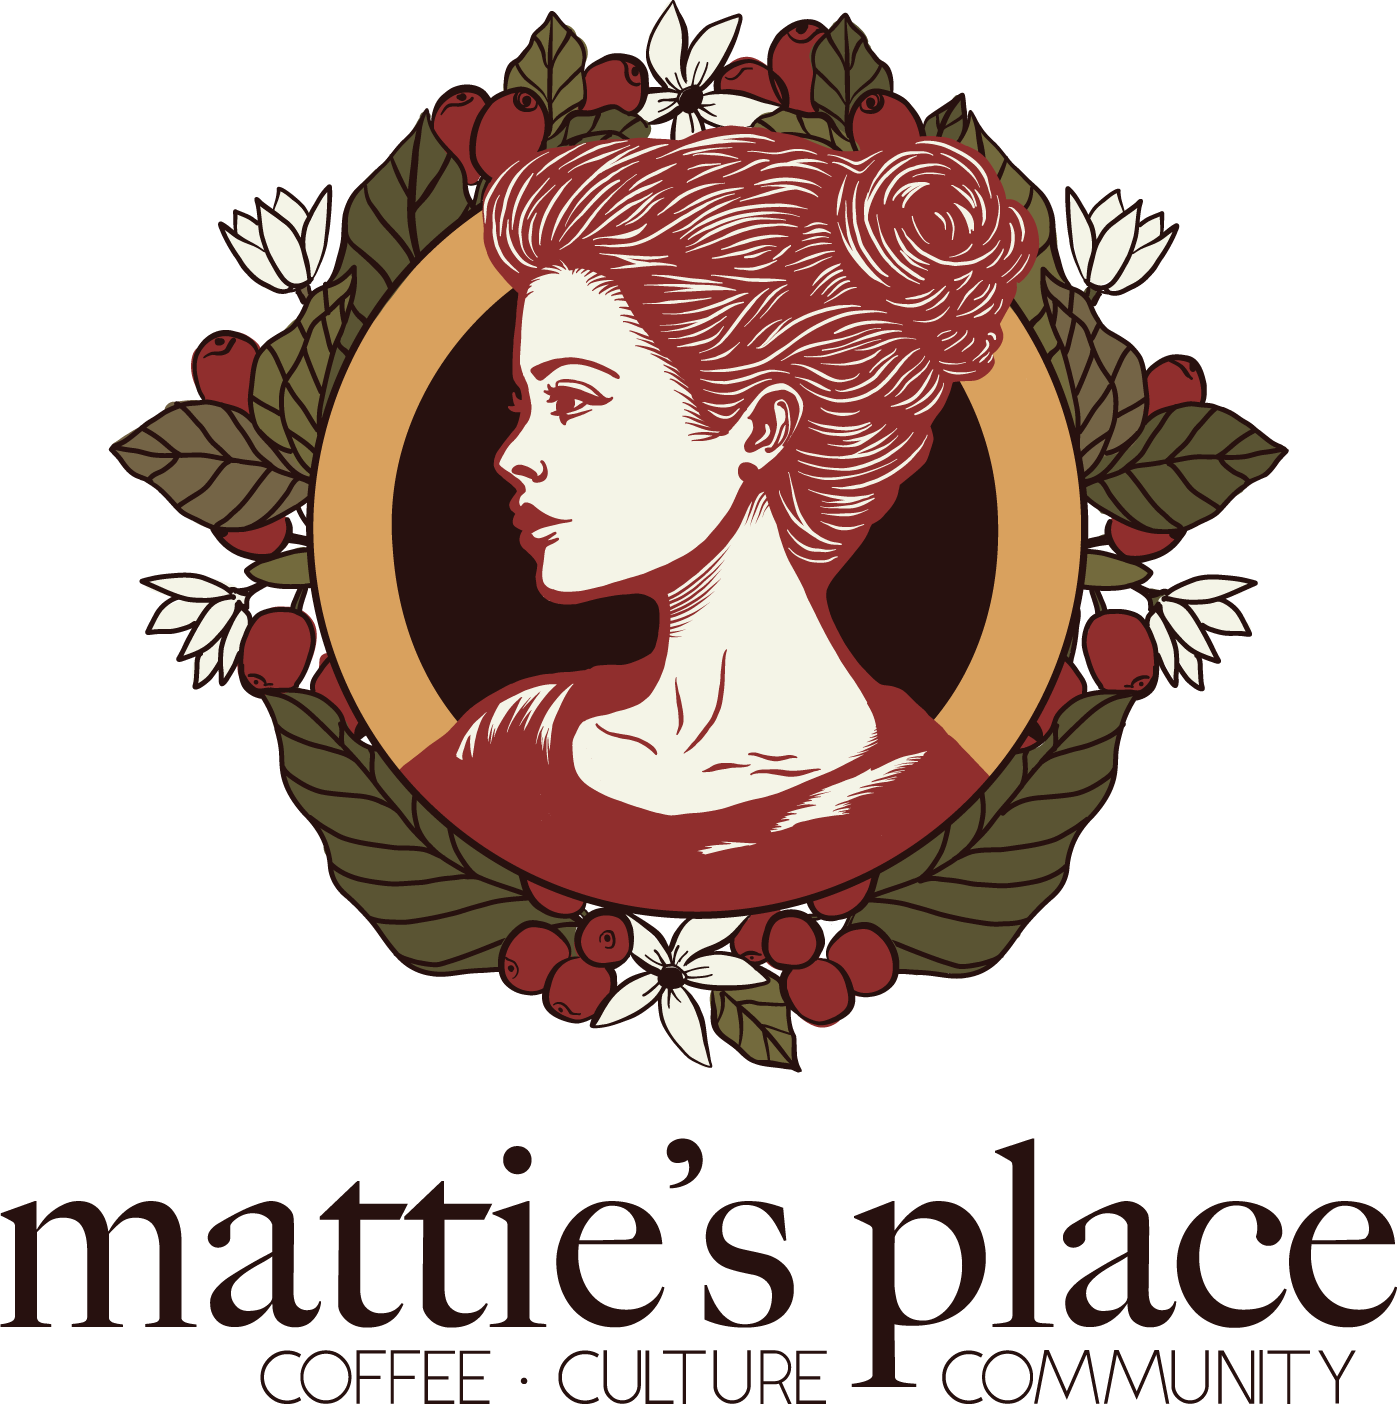 The logo for mattie 's place coffee culture community